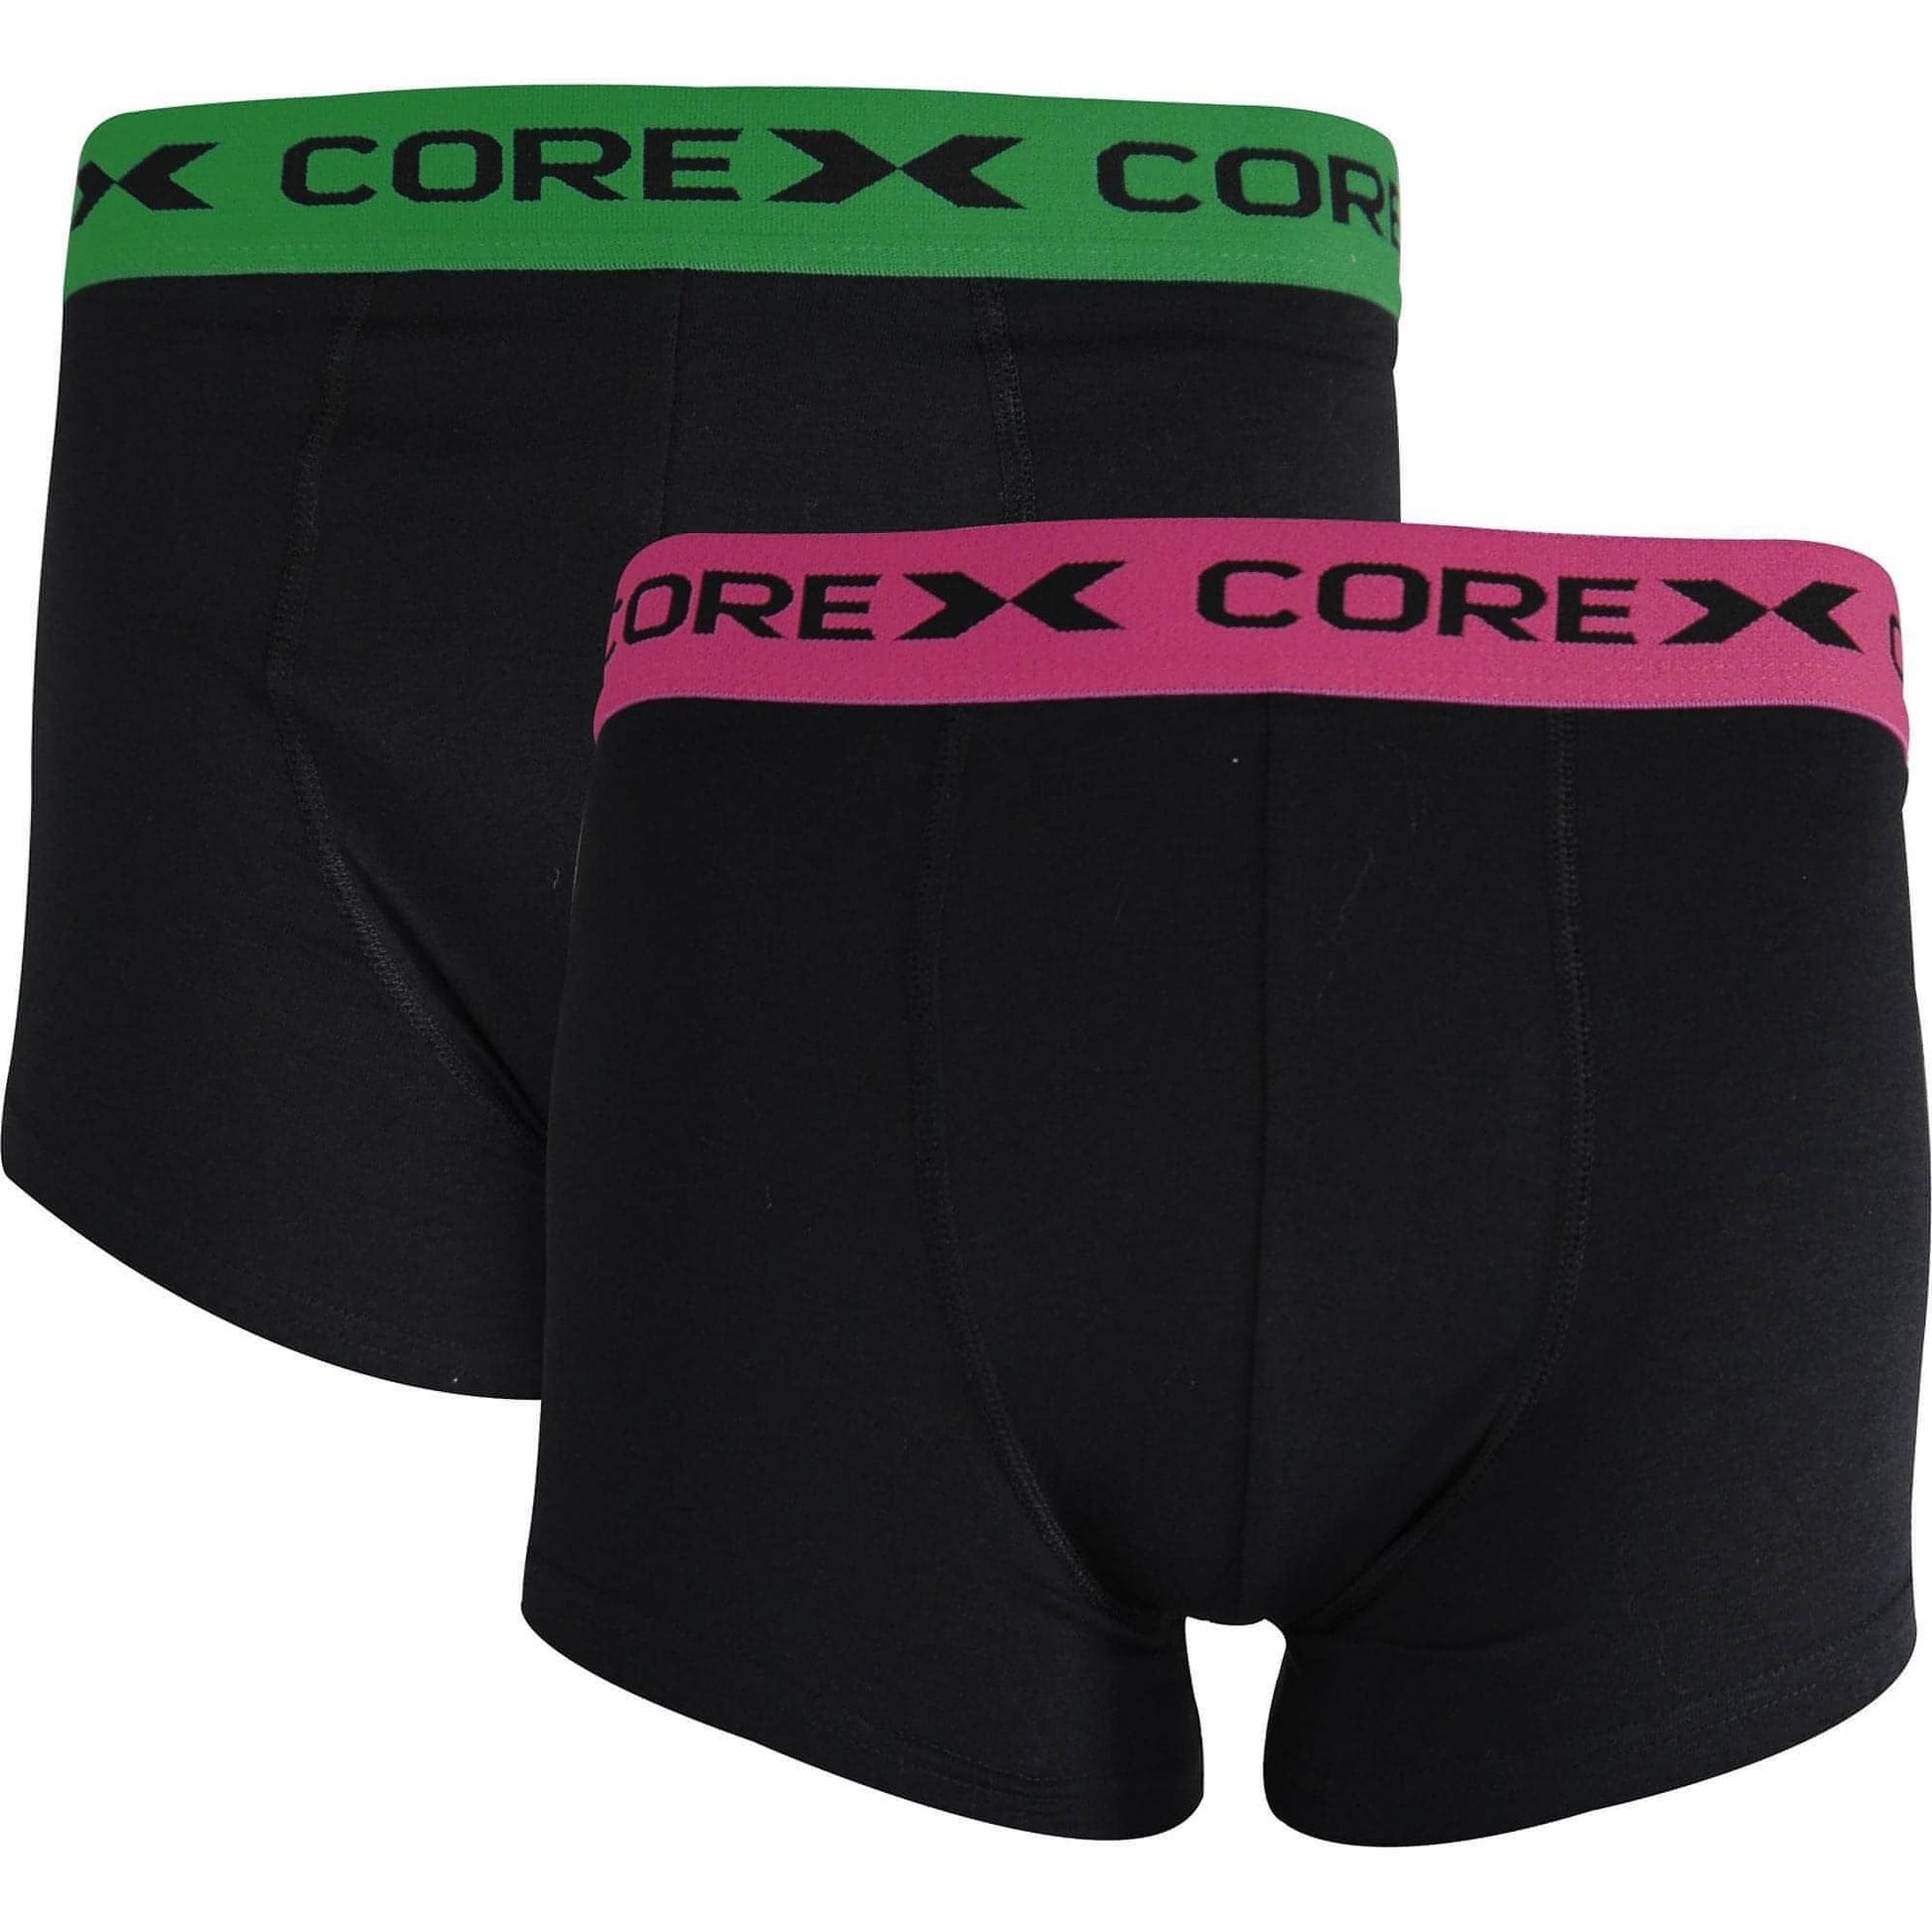 Corex Fitness Classic Pack Boxers 1P204921Wm Raspberrymint